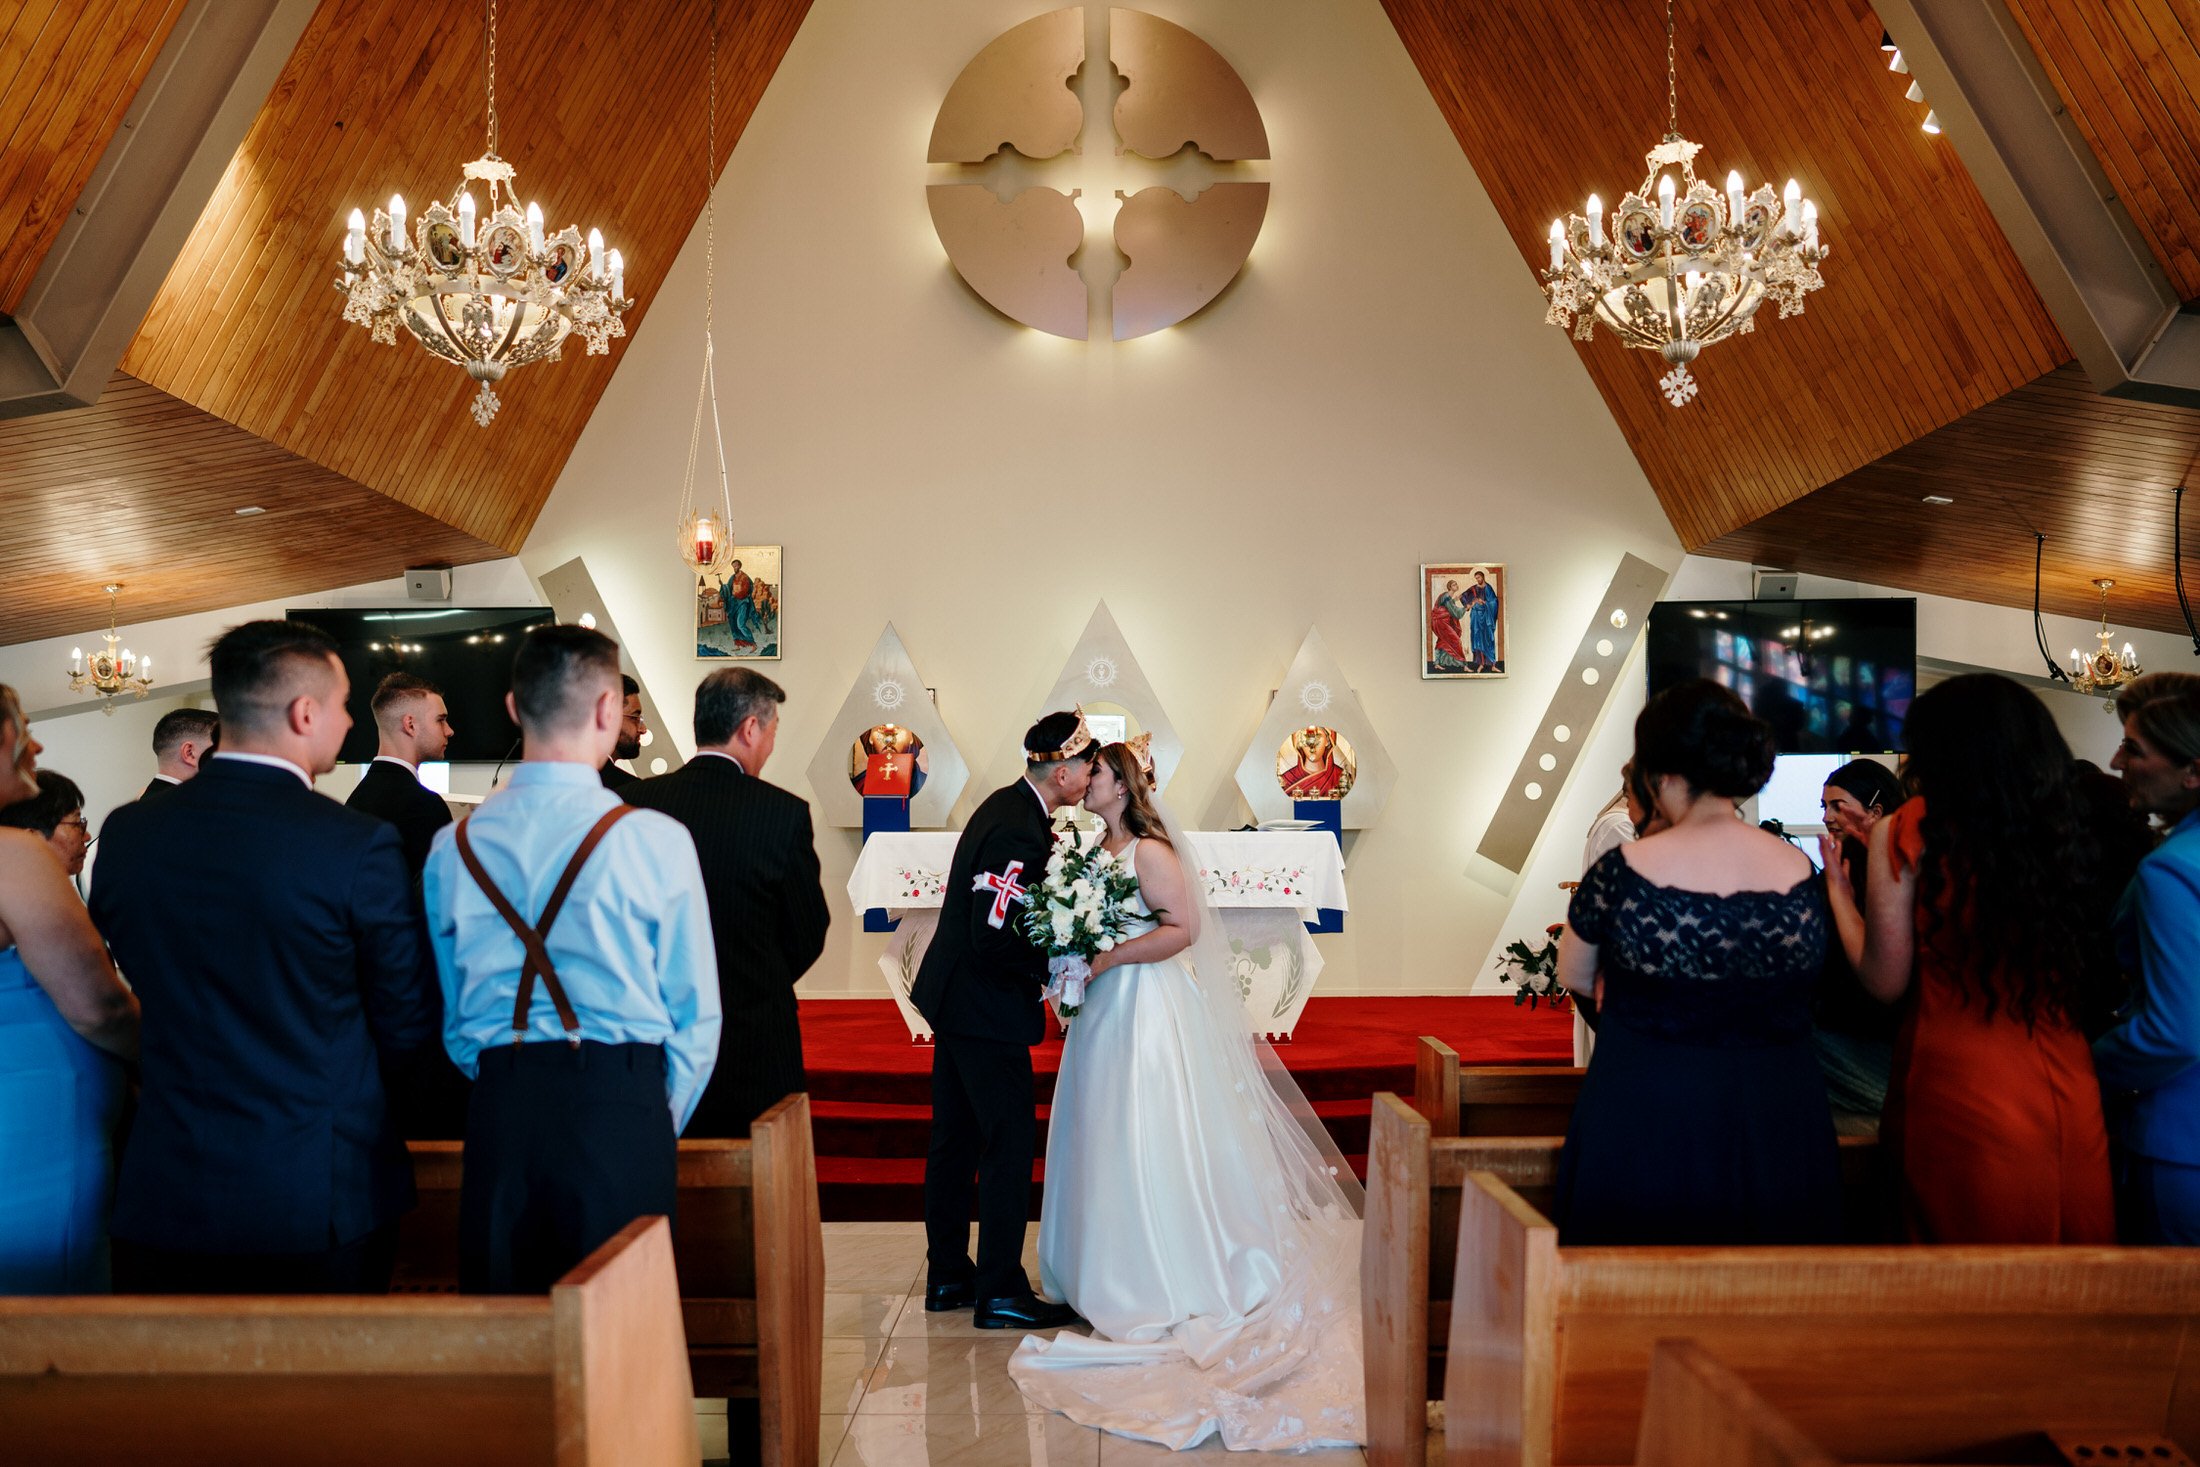 Auckland Wedding Photographer | Auckland Wedding Videographer | Auckland Wedding Venue | Bracu Estate Venue | South Auckland Venue | Auckland Photographer | Church Wedding